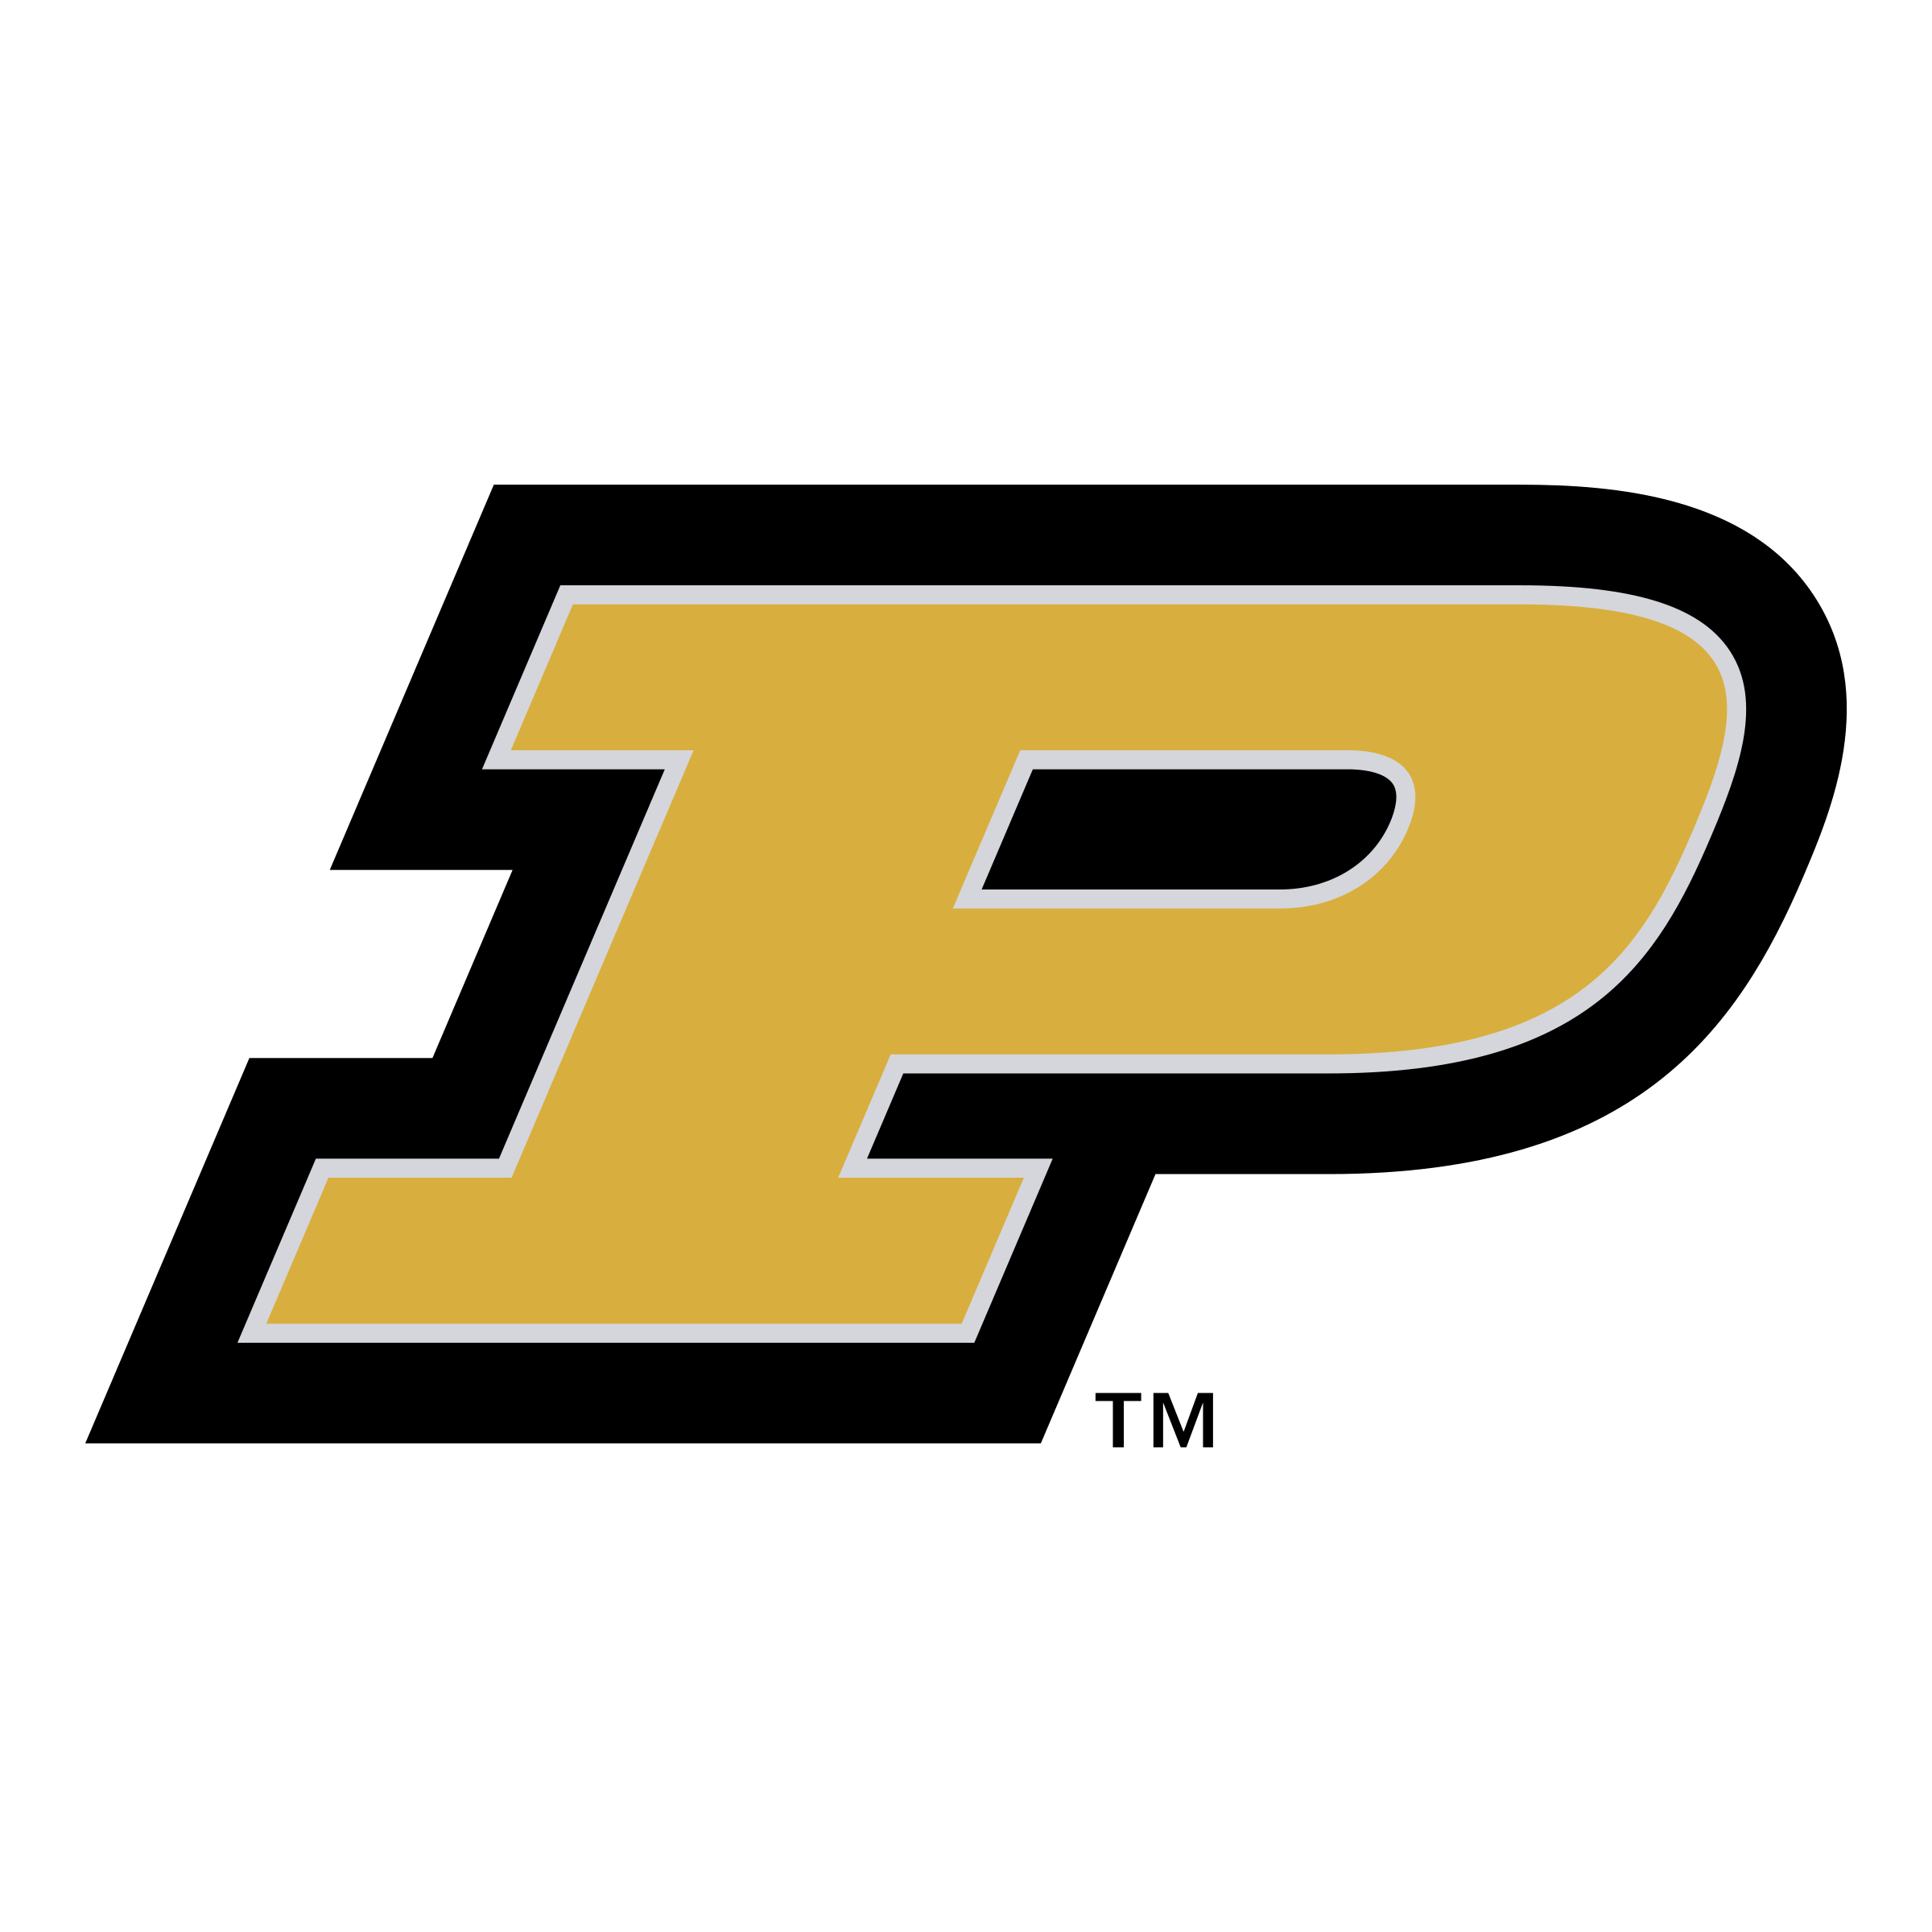 Purdue University Logo - Purdue University BoilerMakers Logo PNG Transparent & SVG Vector